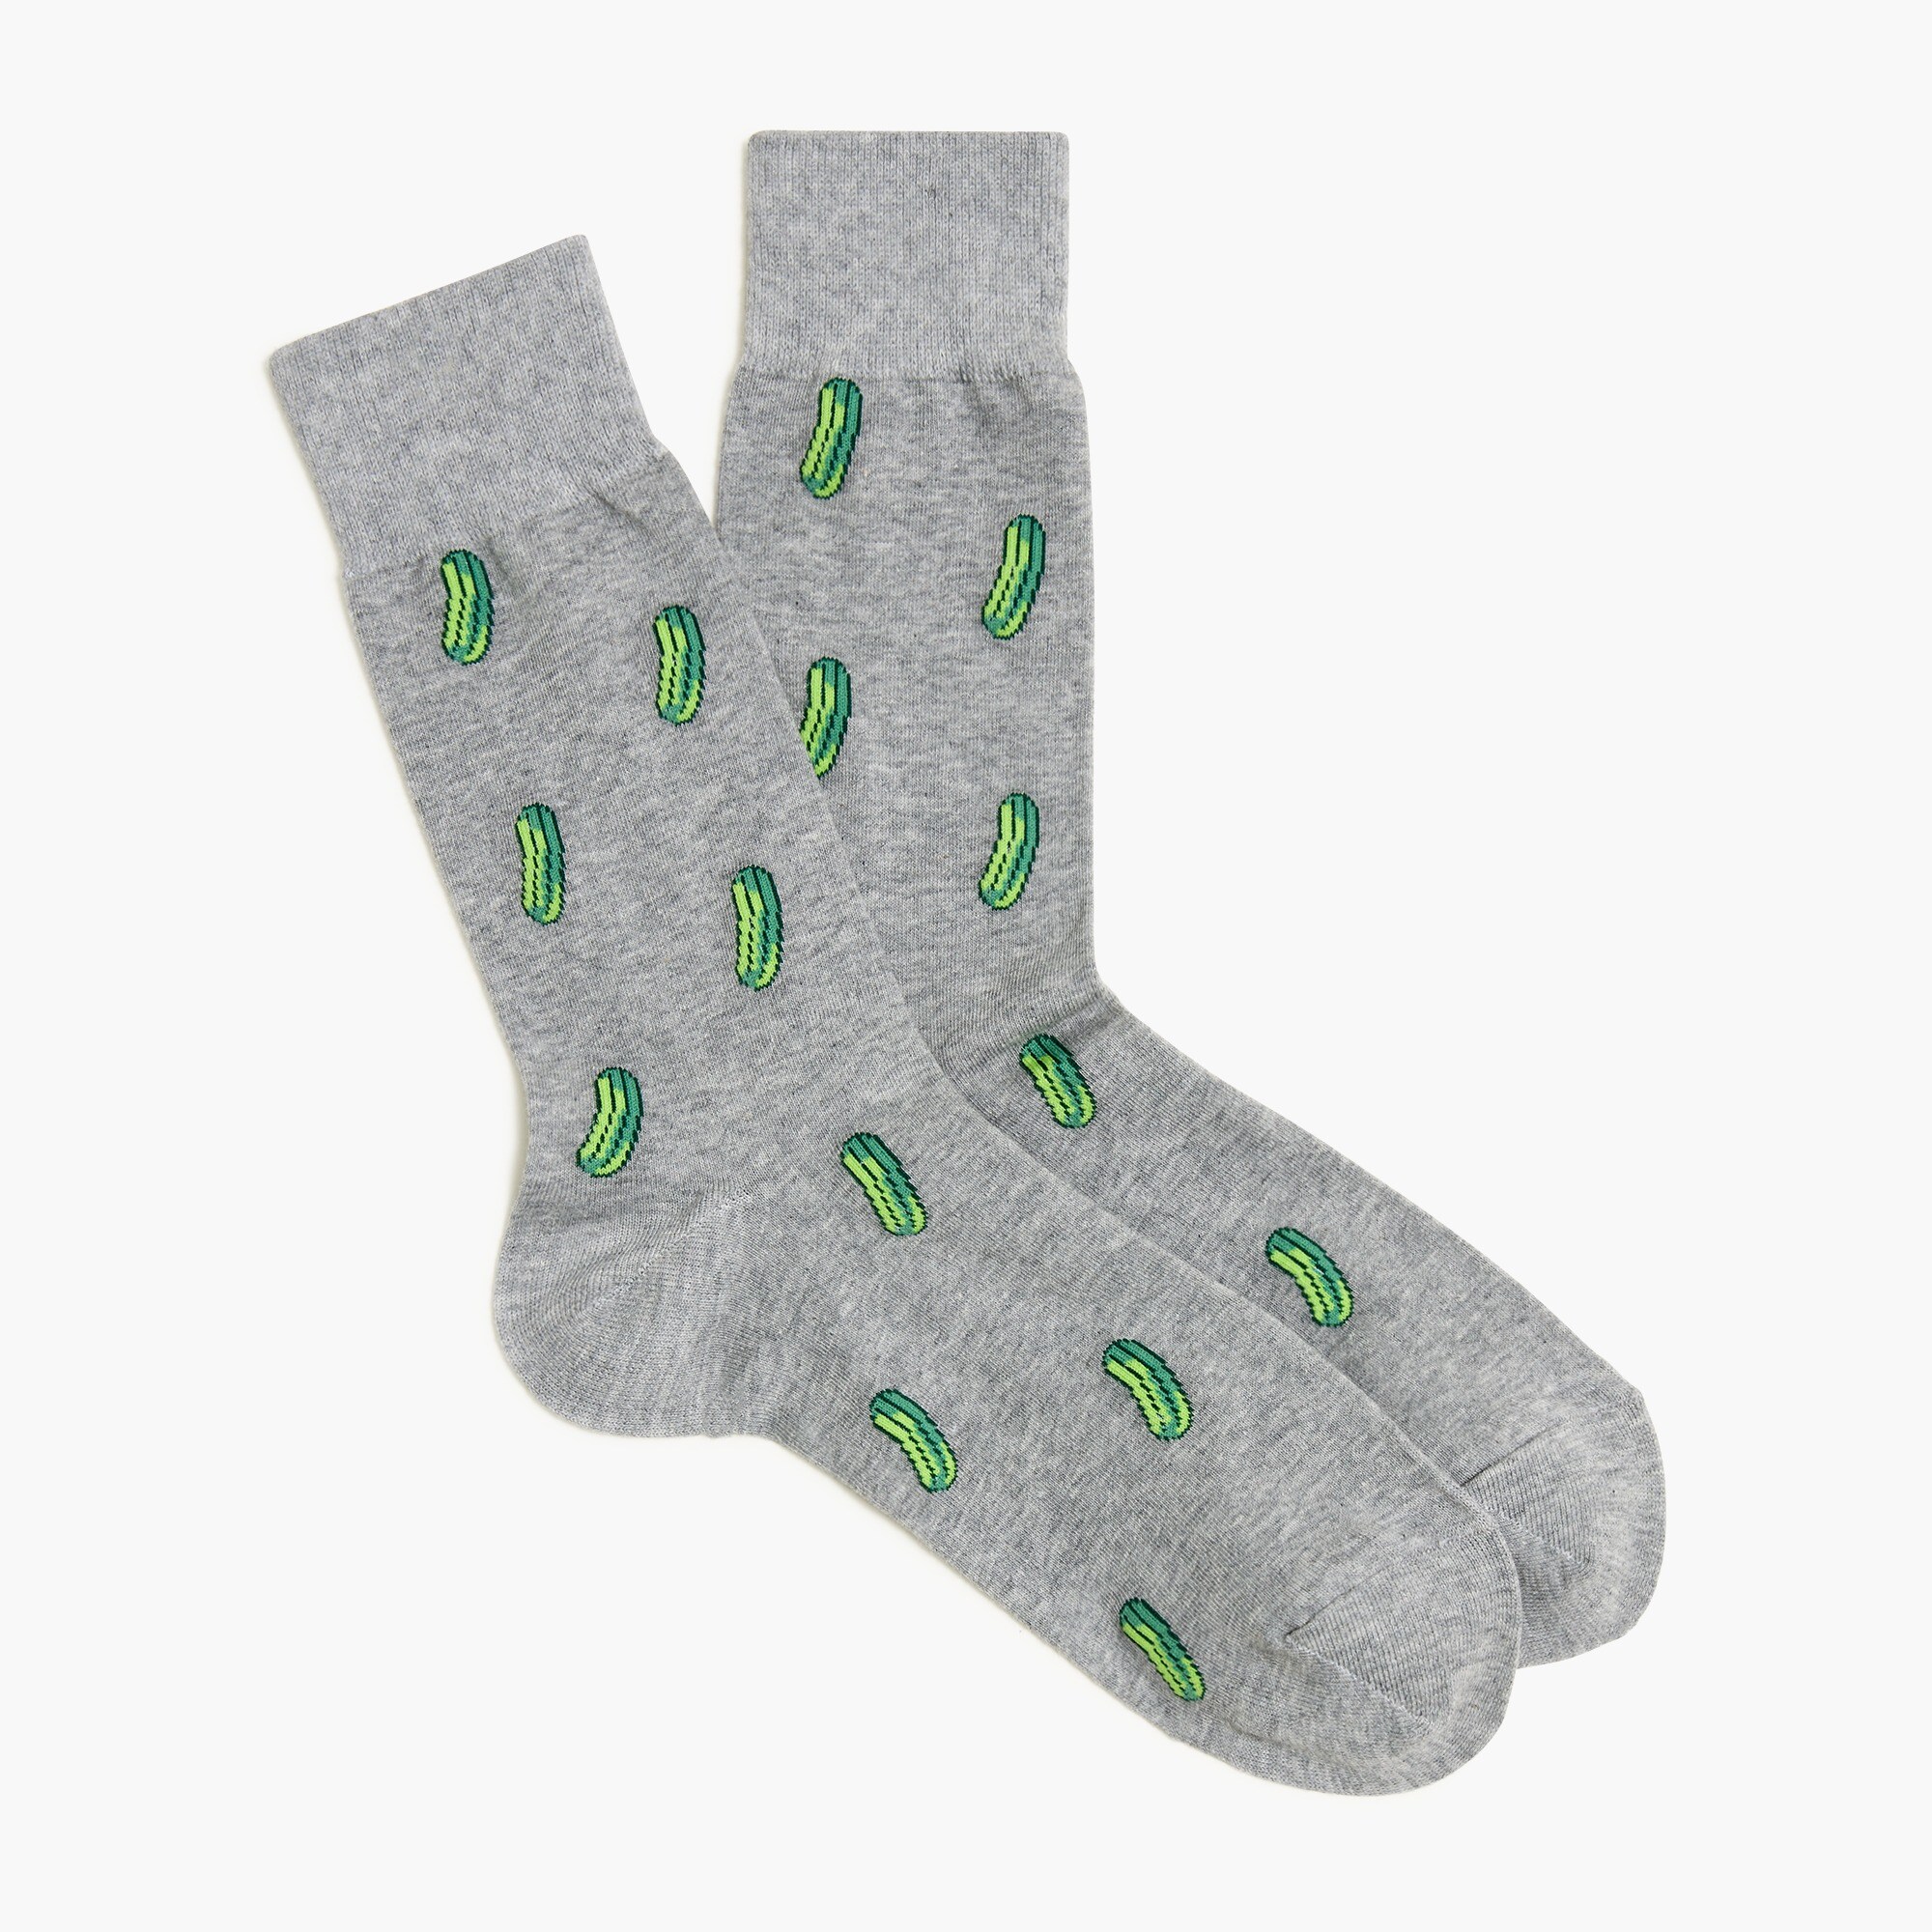  Pickle socks